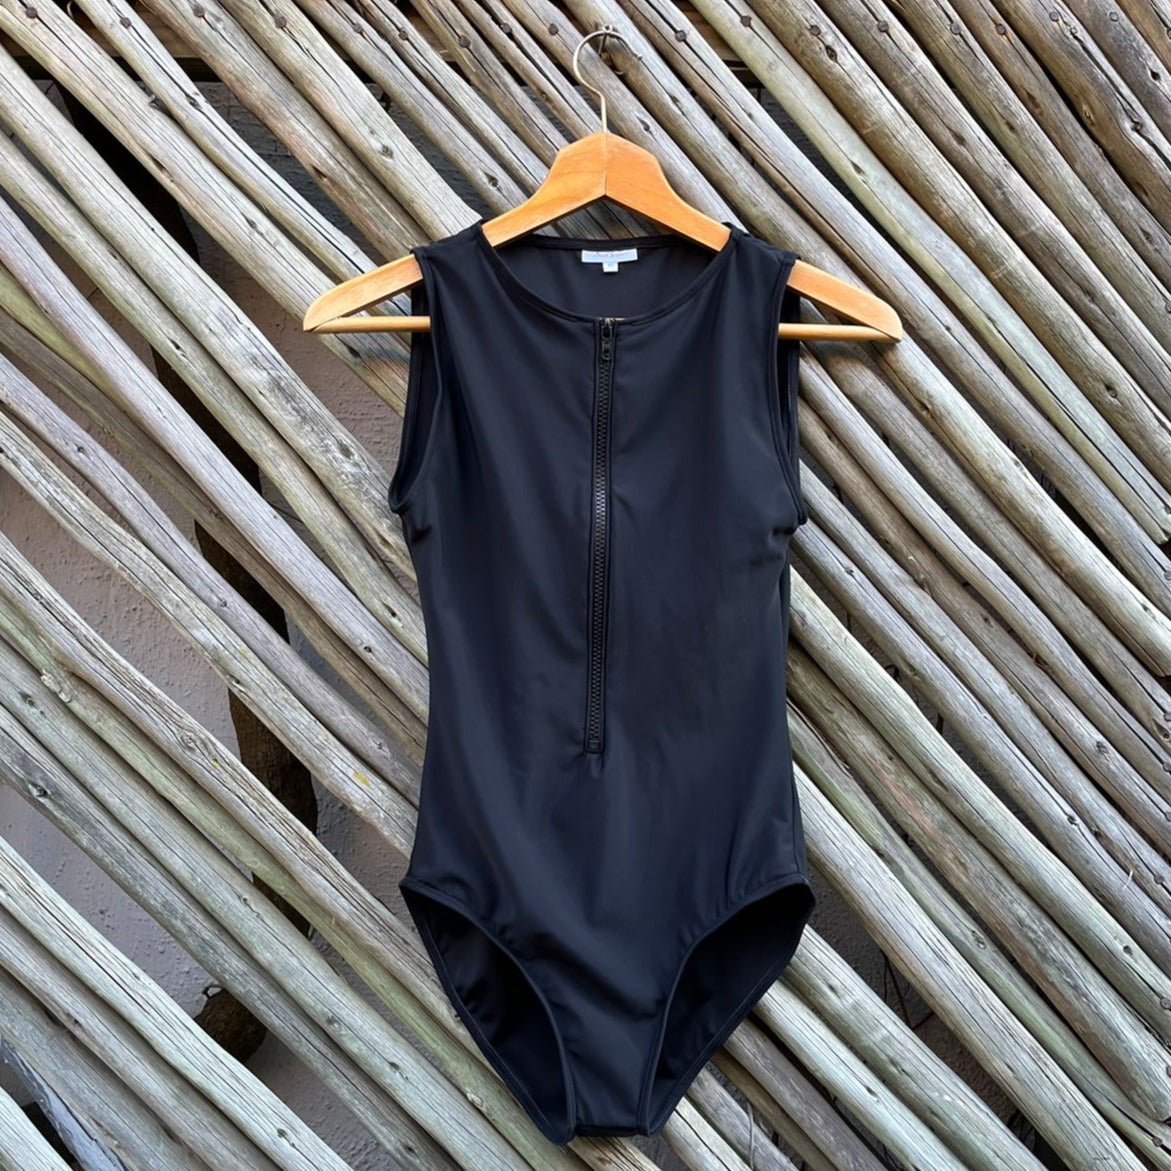 Classic Black Sleeveless Frontzip Swimsuit